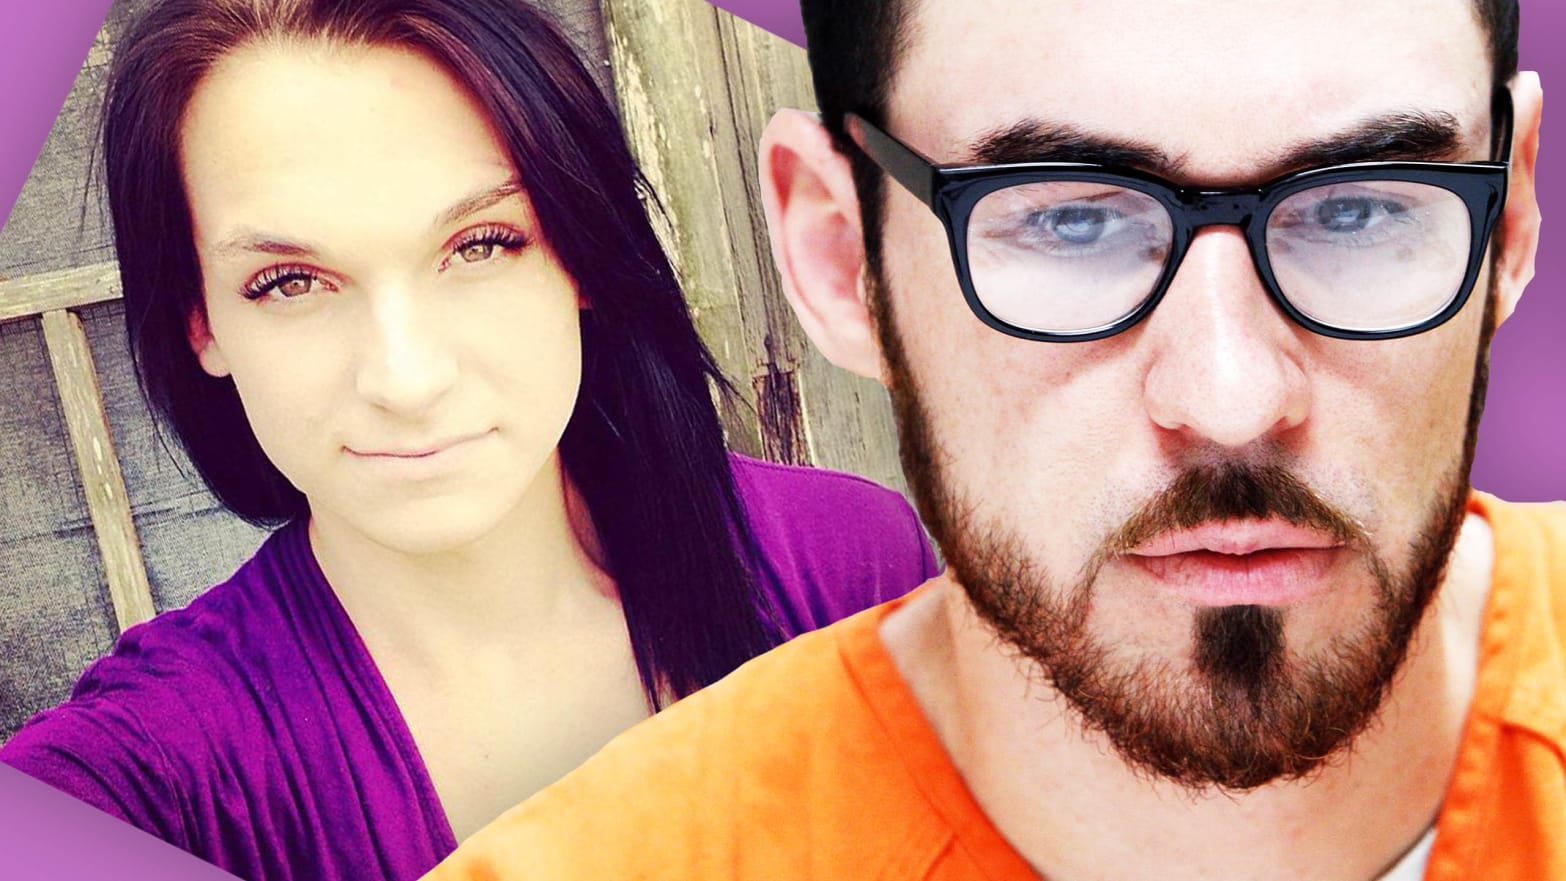 Why Did Joshua Vallum Kill Mercedes Williamson, His Transgender Girlfriend?